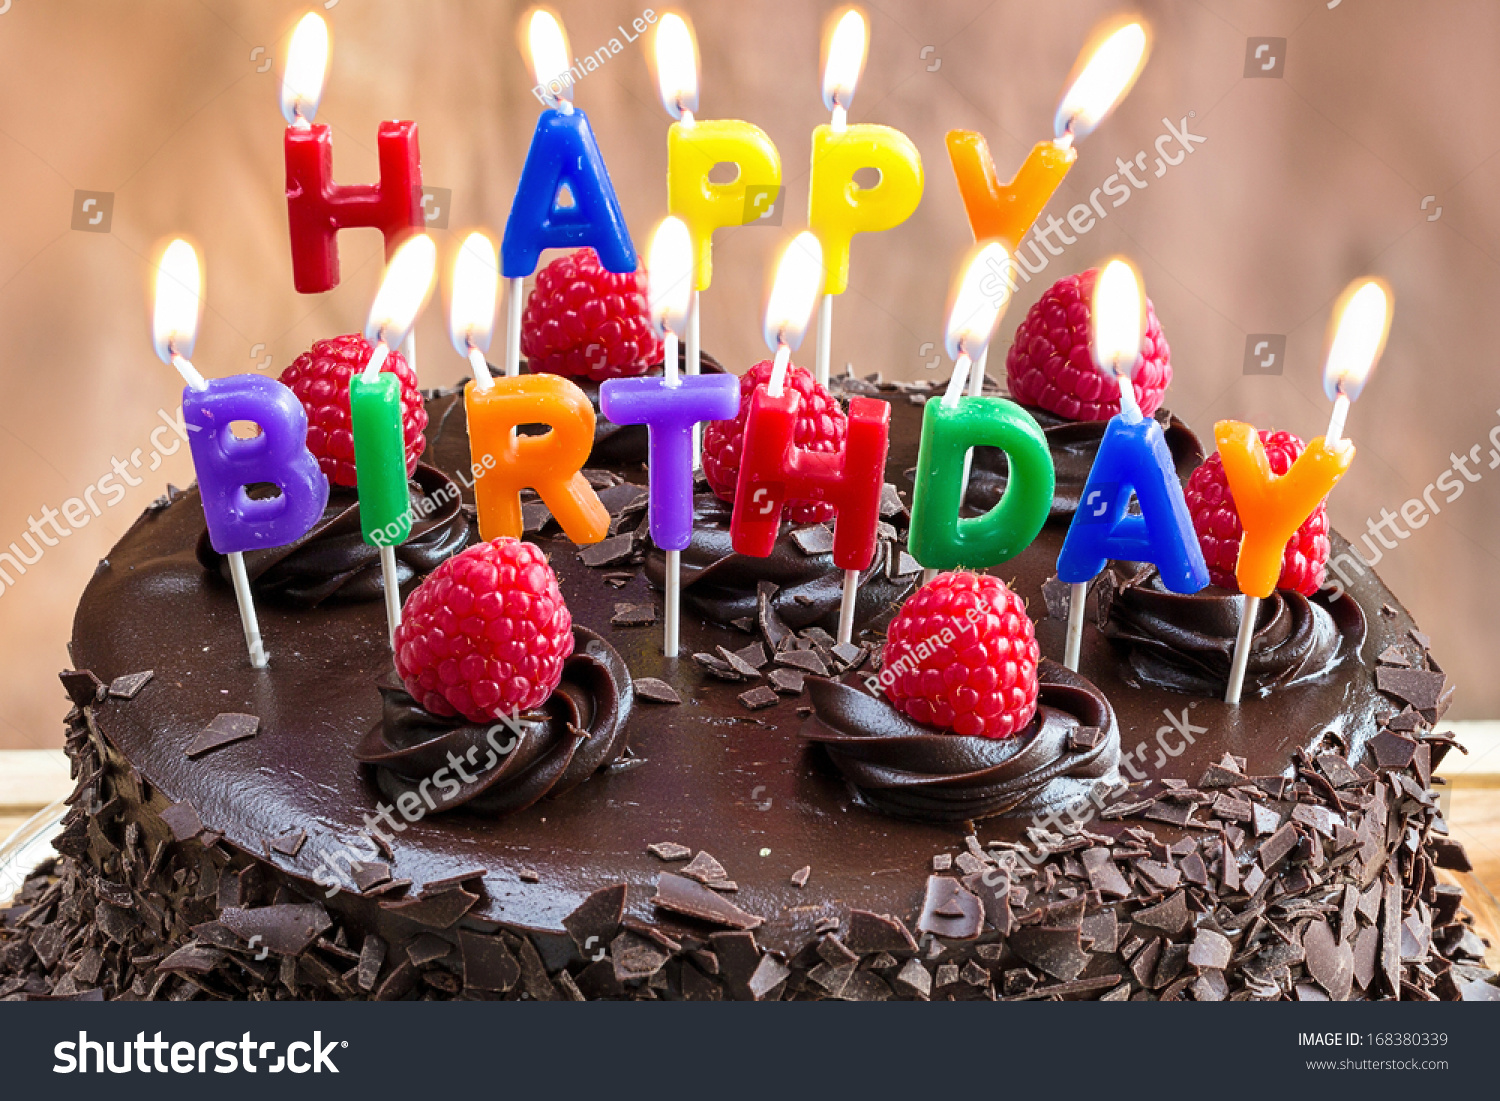 Happy Birthday Candles On Chocolate Cake Stock Photo ...